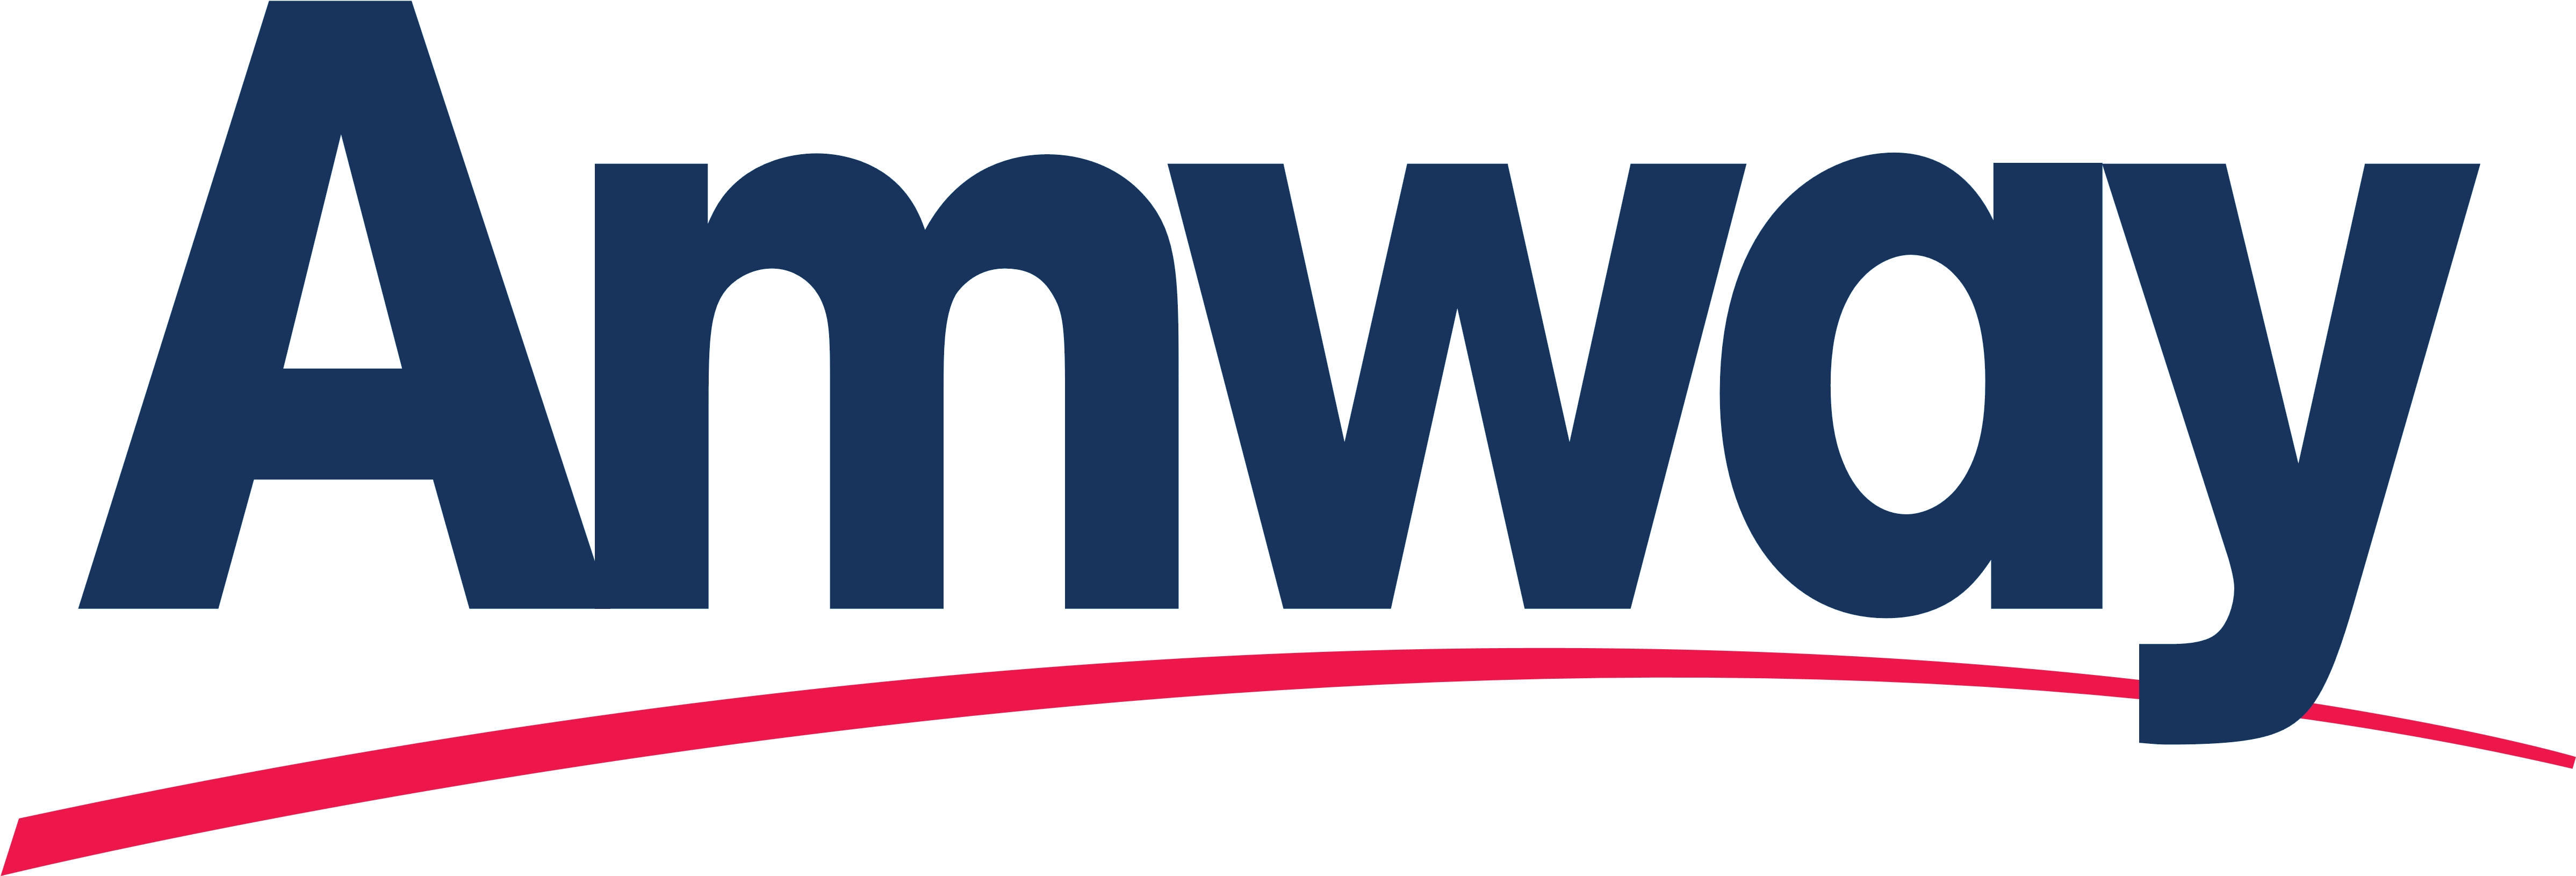 Amway Logos Download Rh Logos Download Com Amway New - Amway Logo White Png (5000x1766)